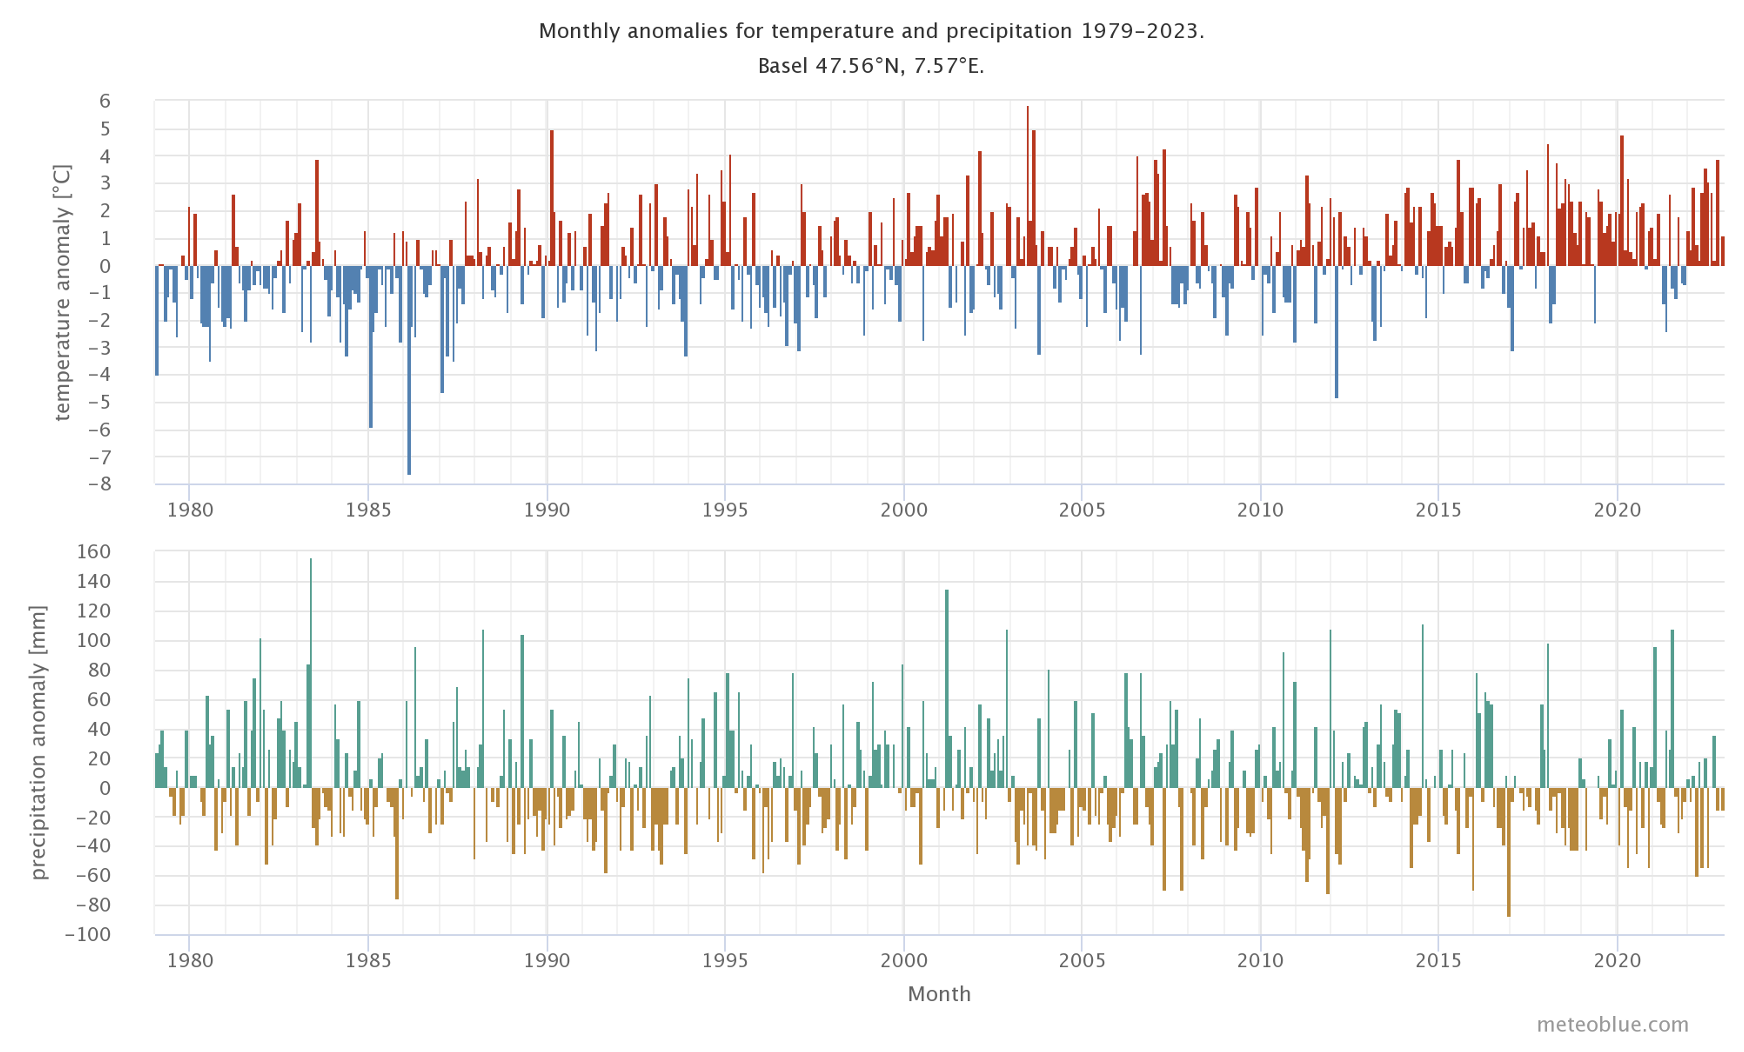 Anomalie mensili di temperatura e precipitazioni a Basilea, panoramica dal 1979 a oggi.